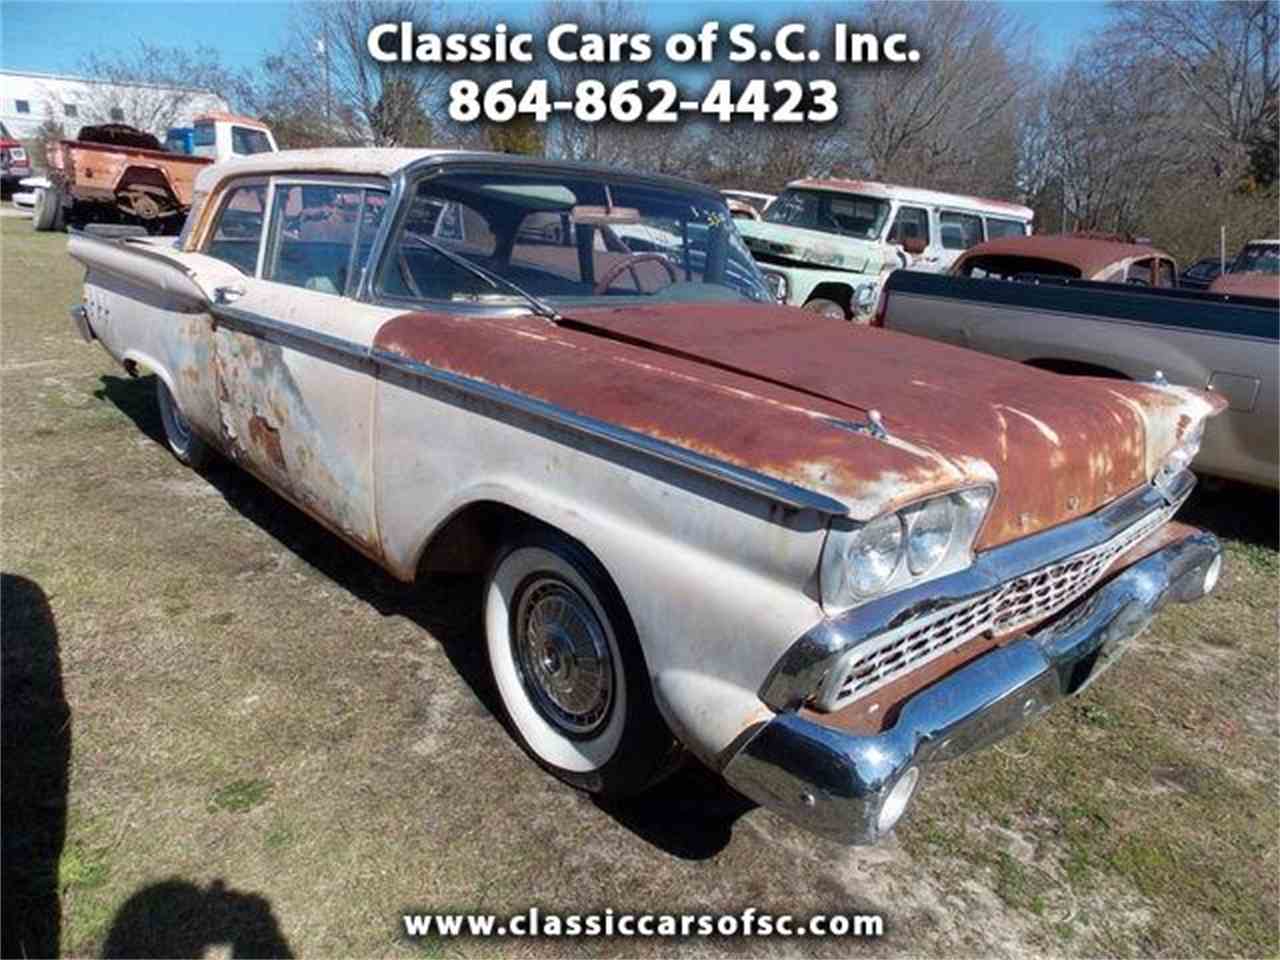 1959 Ford Fairlane For Sale Classiccars Cc 955341 truly Classic Cars South Carolina